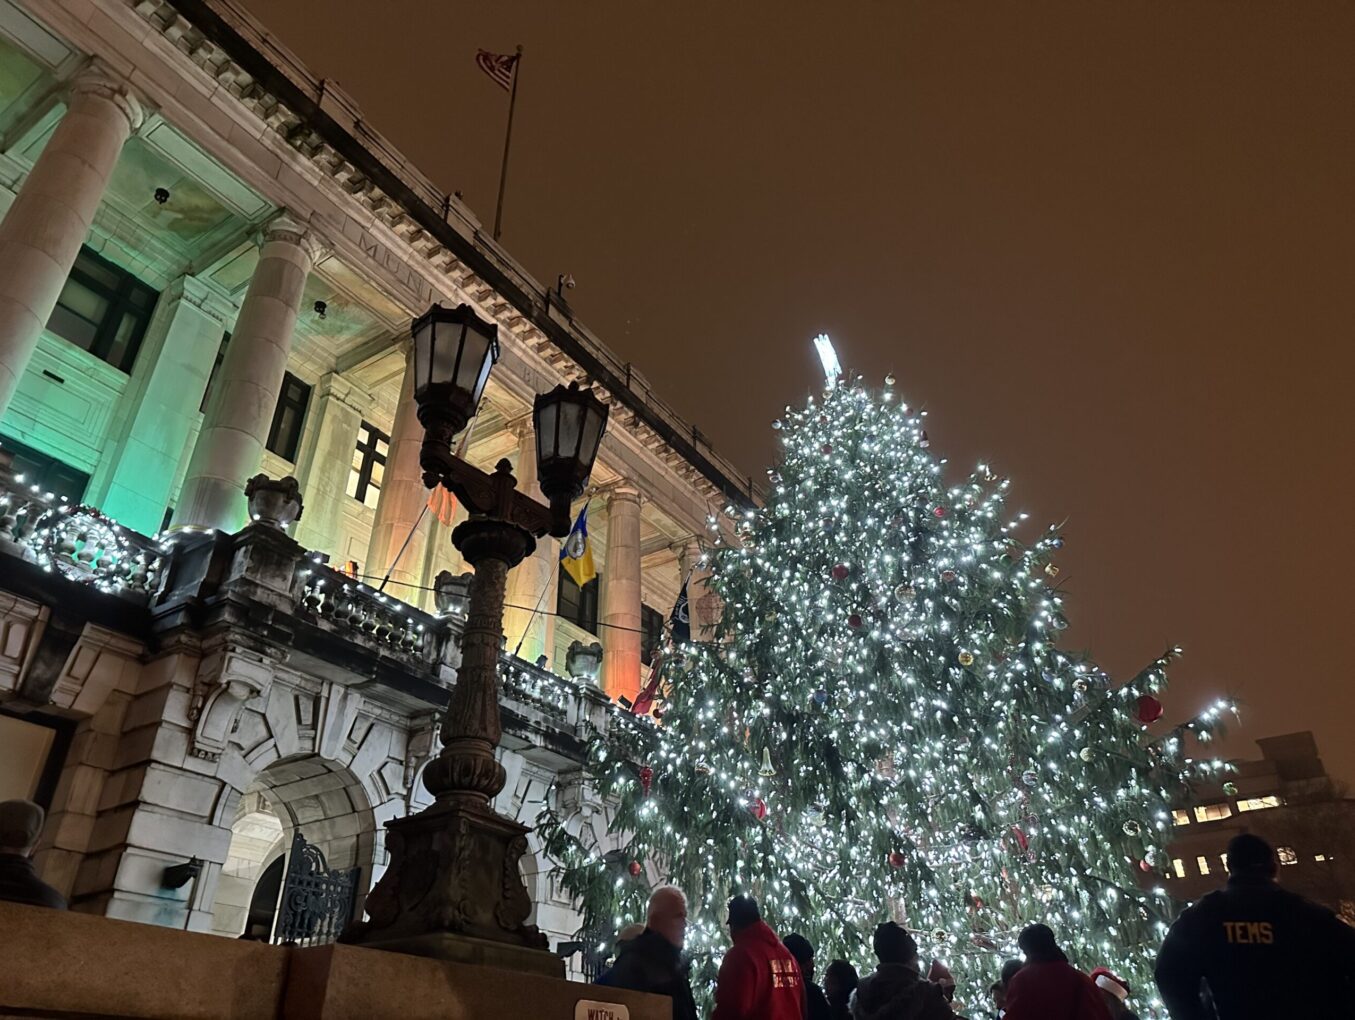 City of Trenton’s Holiday Tree Lighting Update